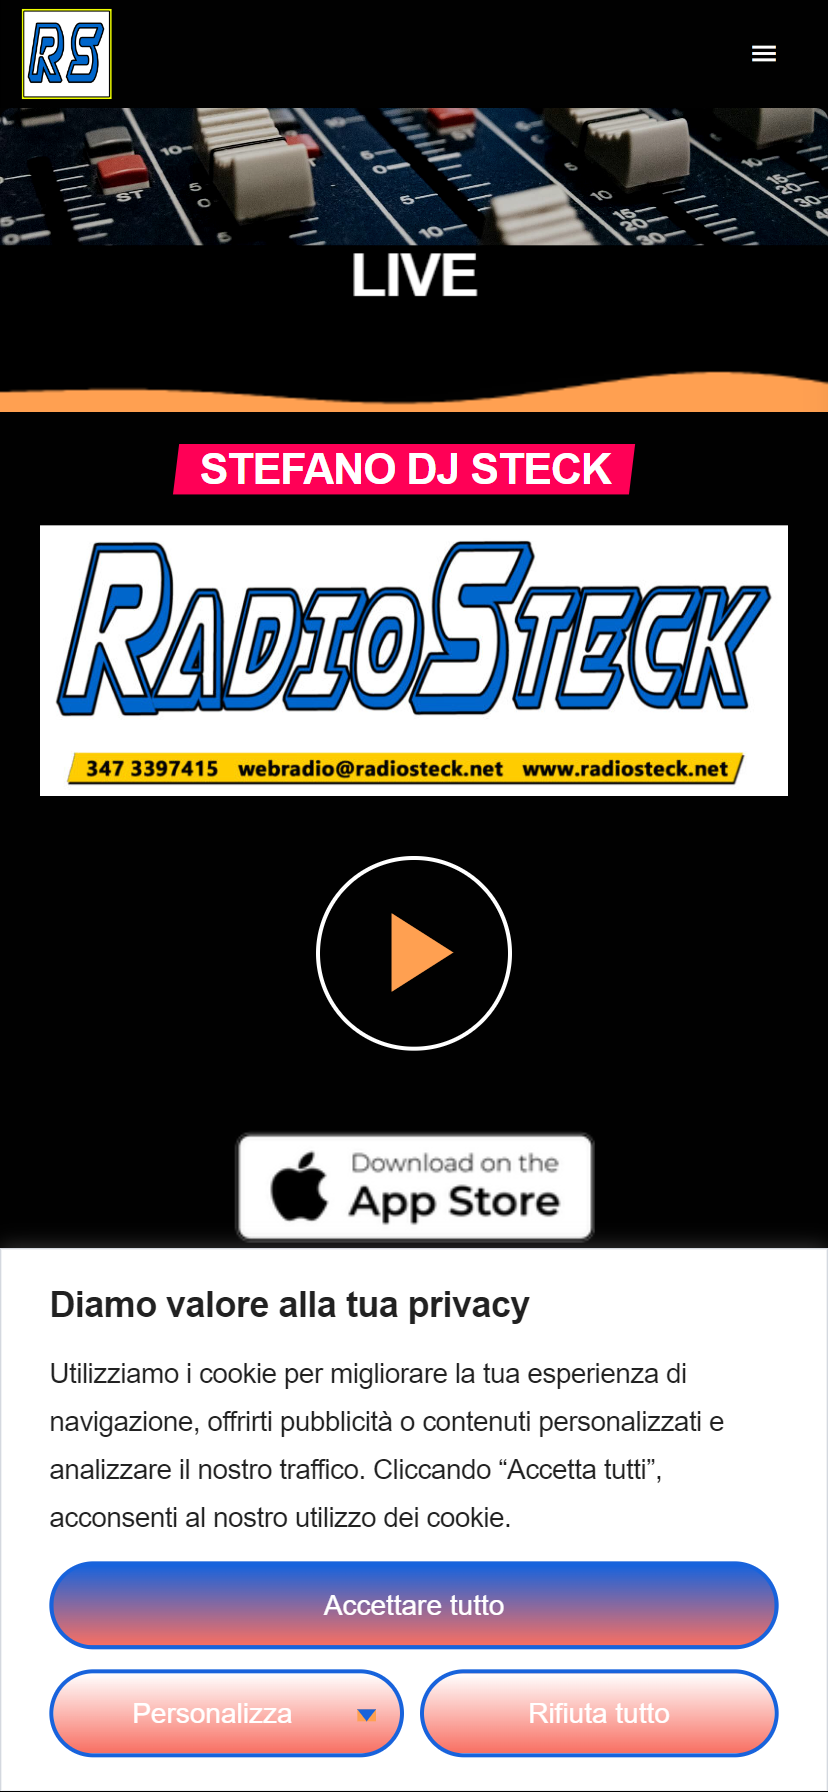 RadioSteck live